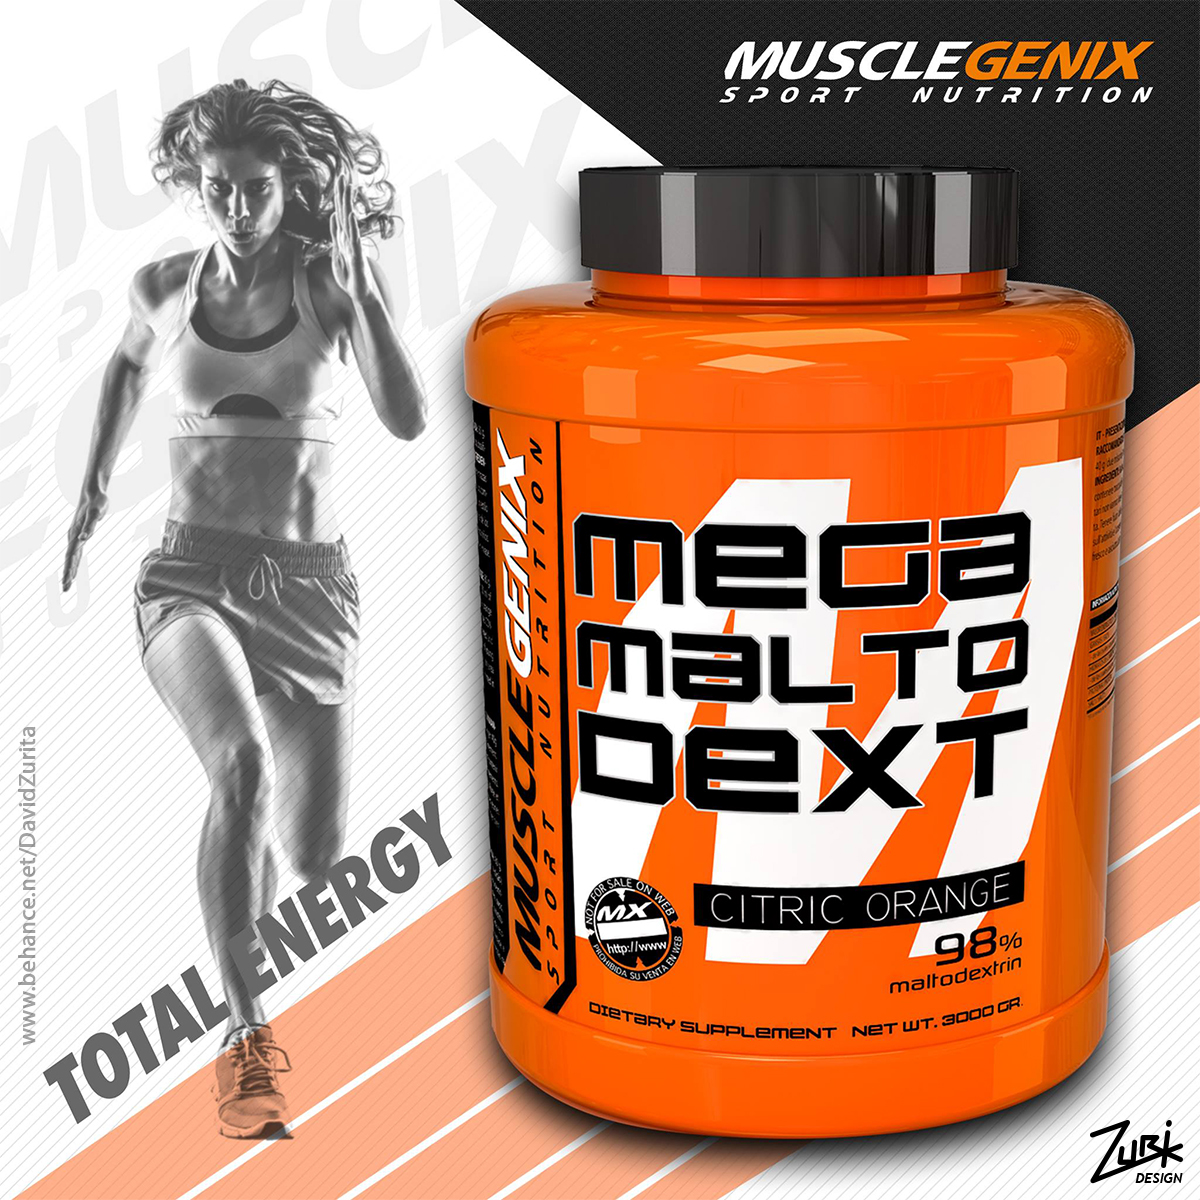 musclegenix muscle nutrition sport gym zuri design david zurita gómez power volumizer whey